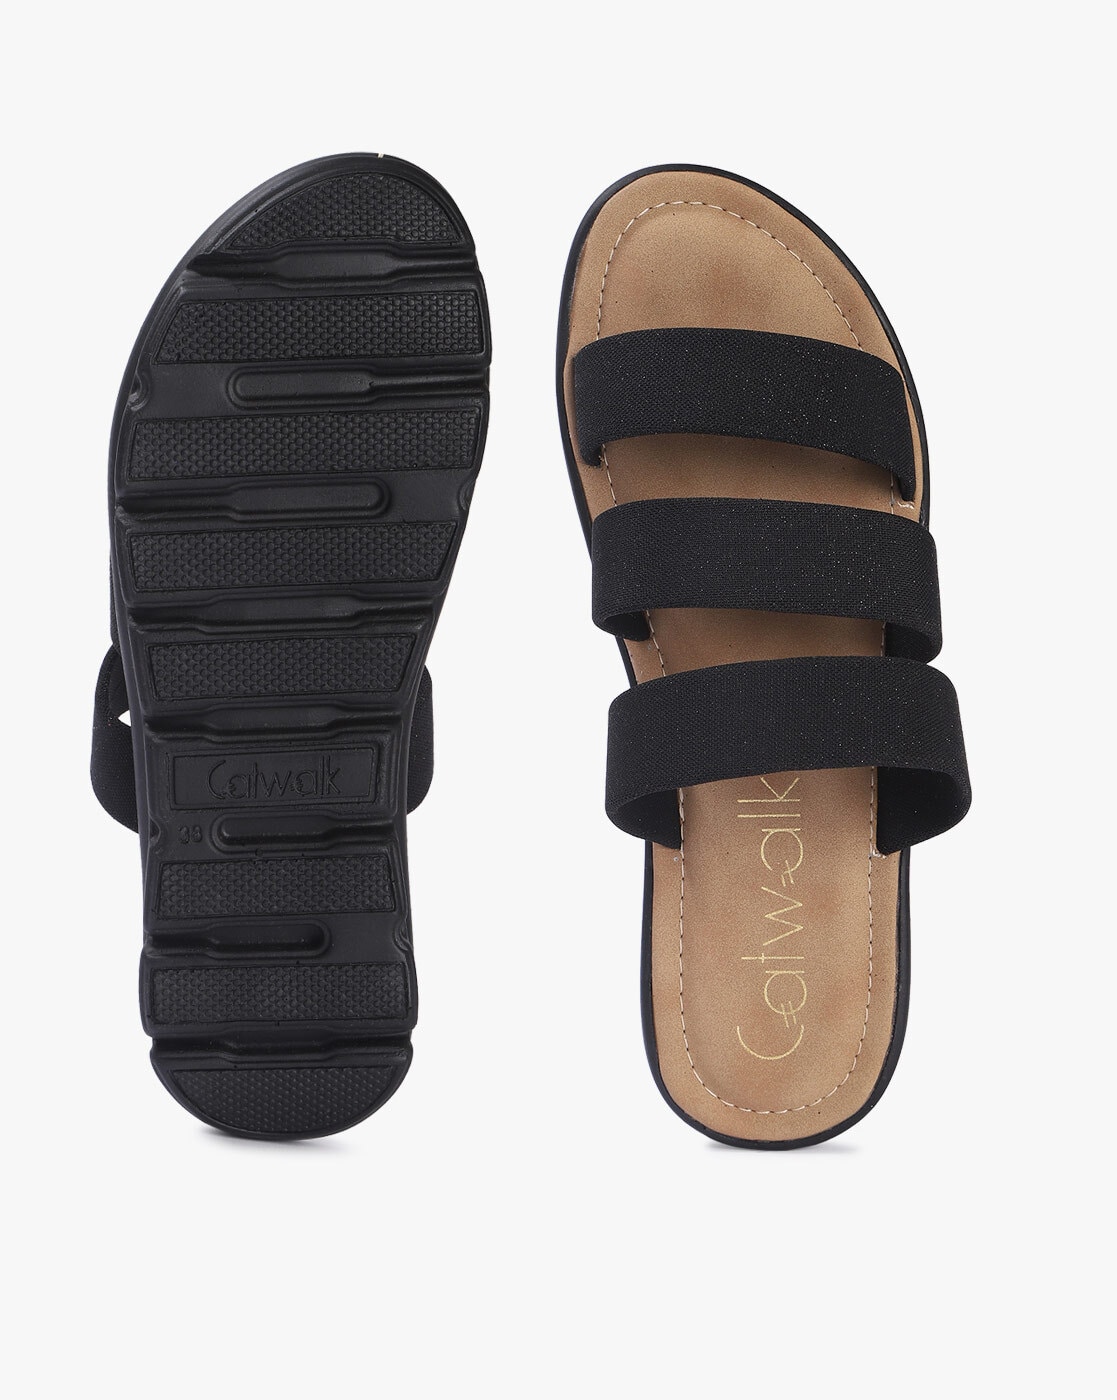 Top more than 178 catwalk black sandals